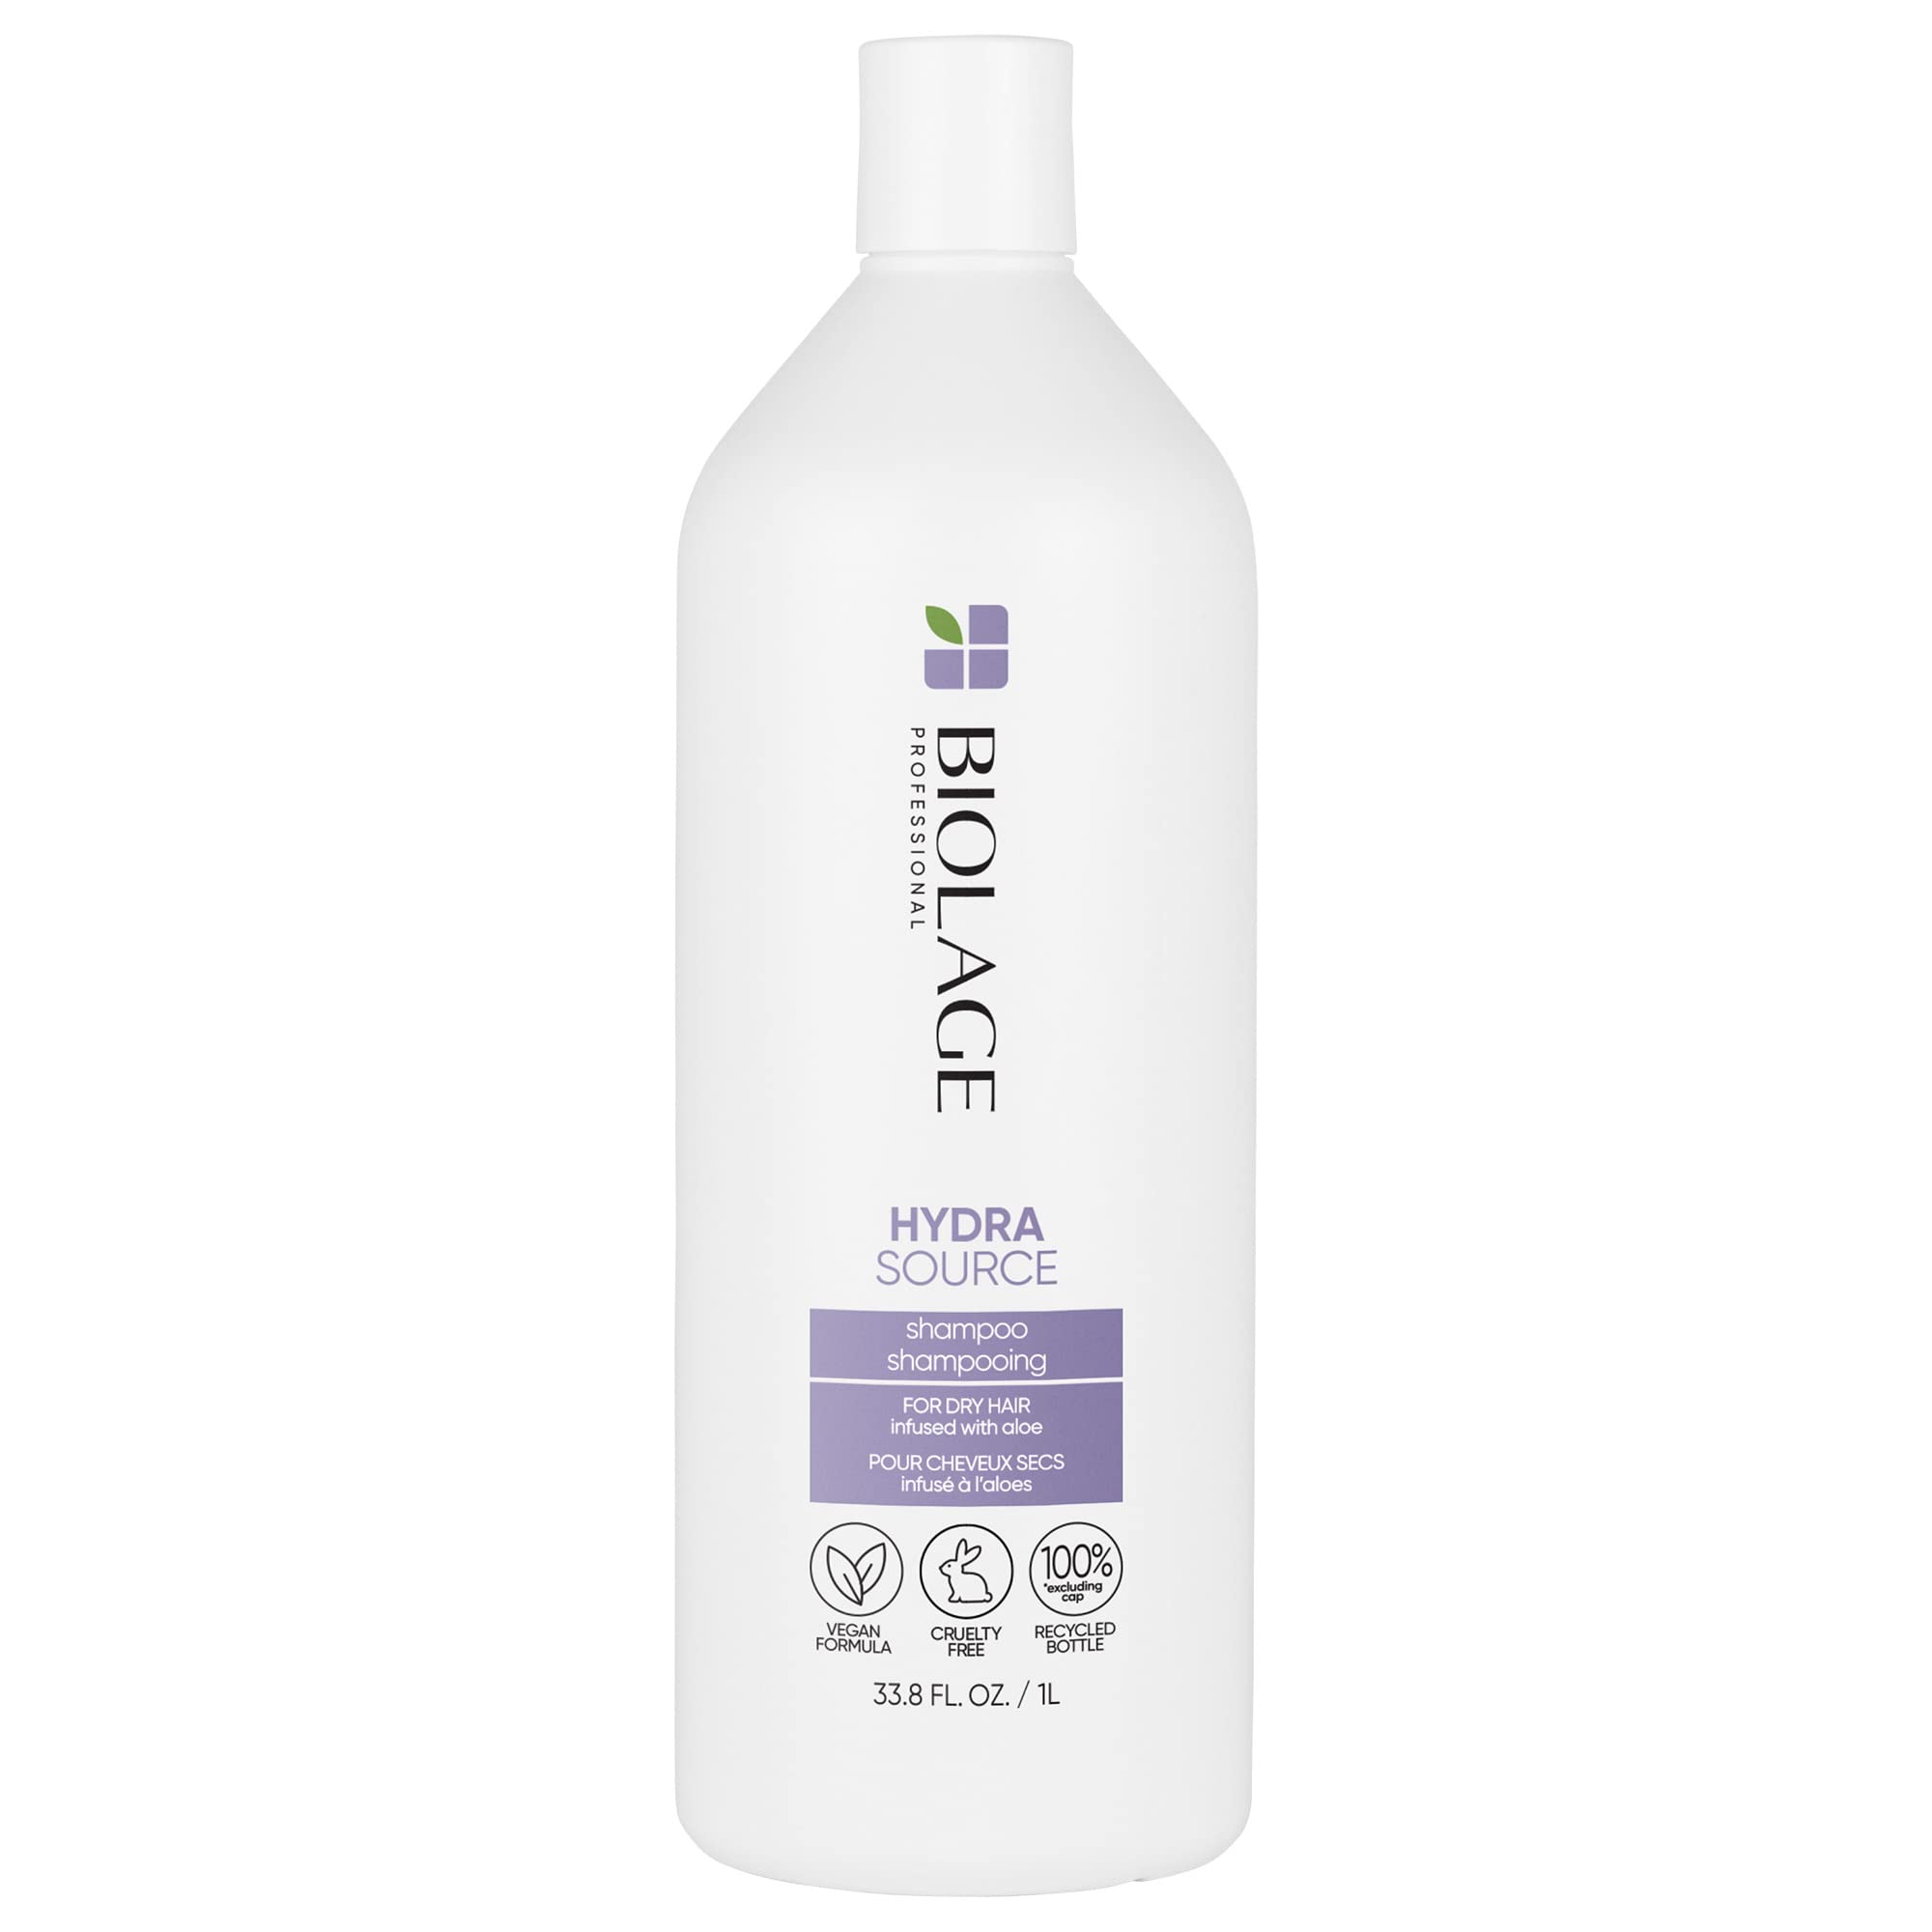 Biolage Hydra Source Shampoo | Hydrates & Moisturizes Dry Hair | Helps Repair Split Ends | Paraben-Free | For Dry Hair | Salon Professional Shampoo | Weightless, Soft Finish | Vegan | Cruelty Free